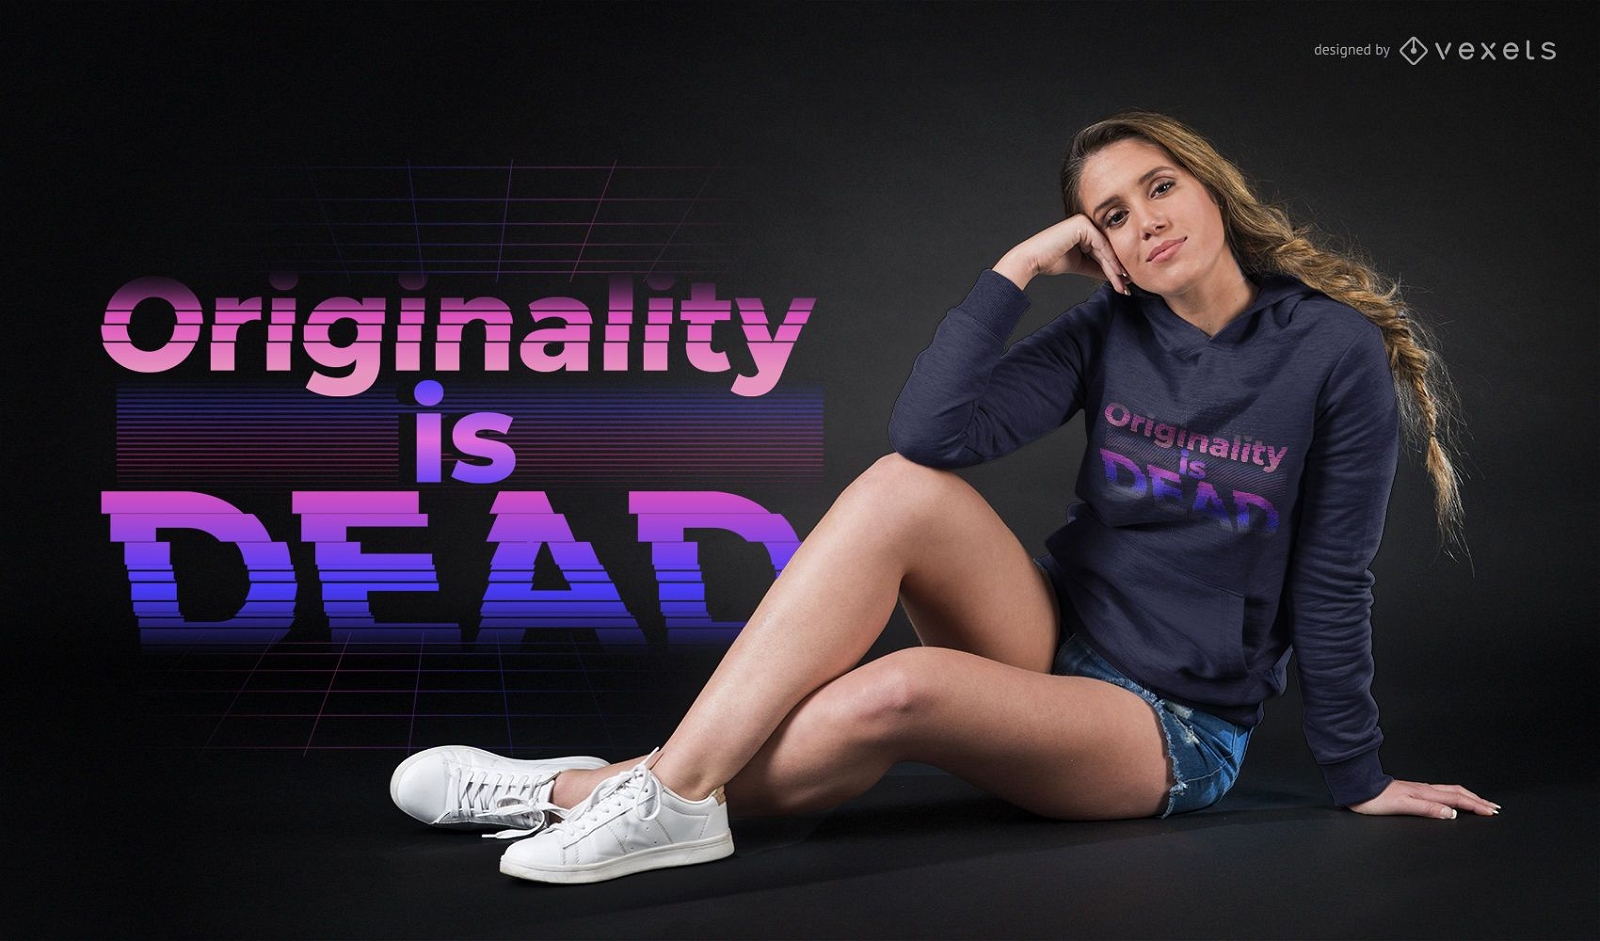 Originality is dead t-shirt design